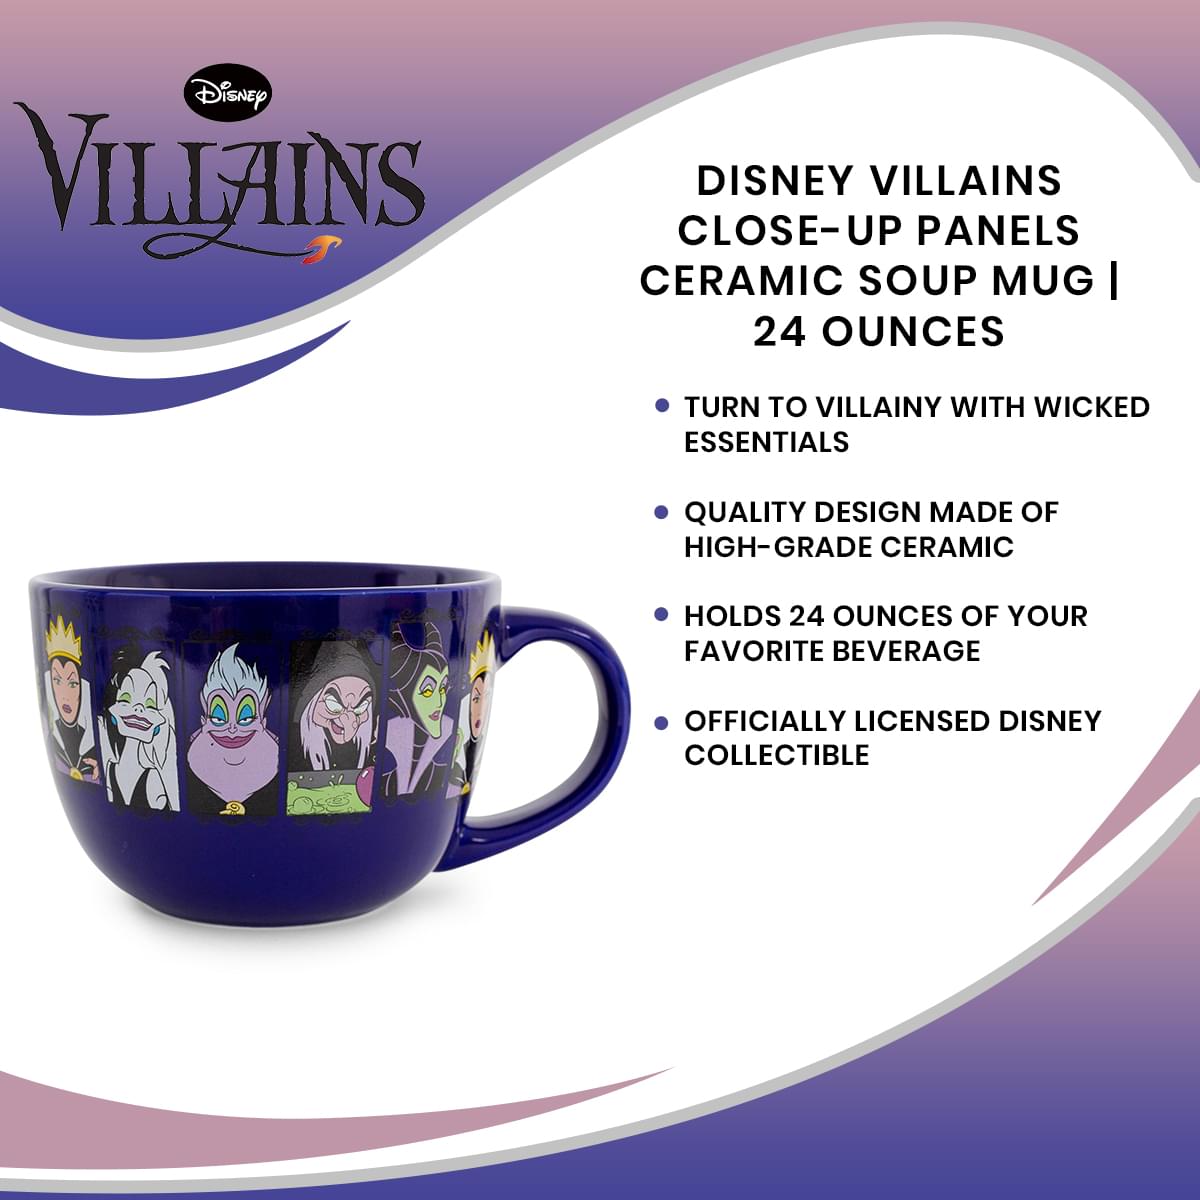 Disney Villains Close-Up Panels Ceramic Soup Mug | 24 Ounces